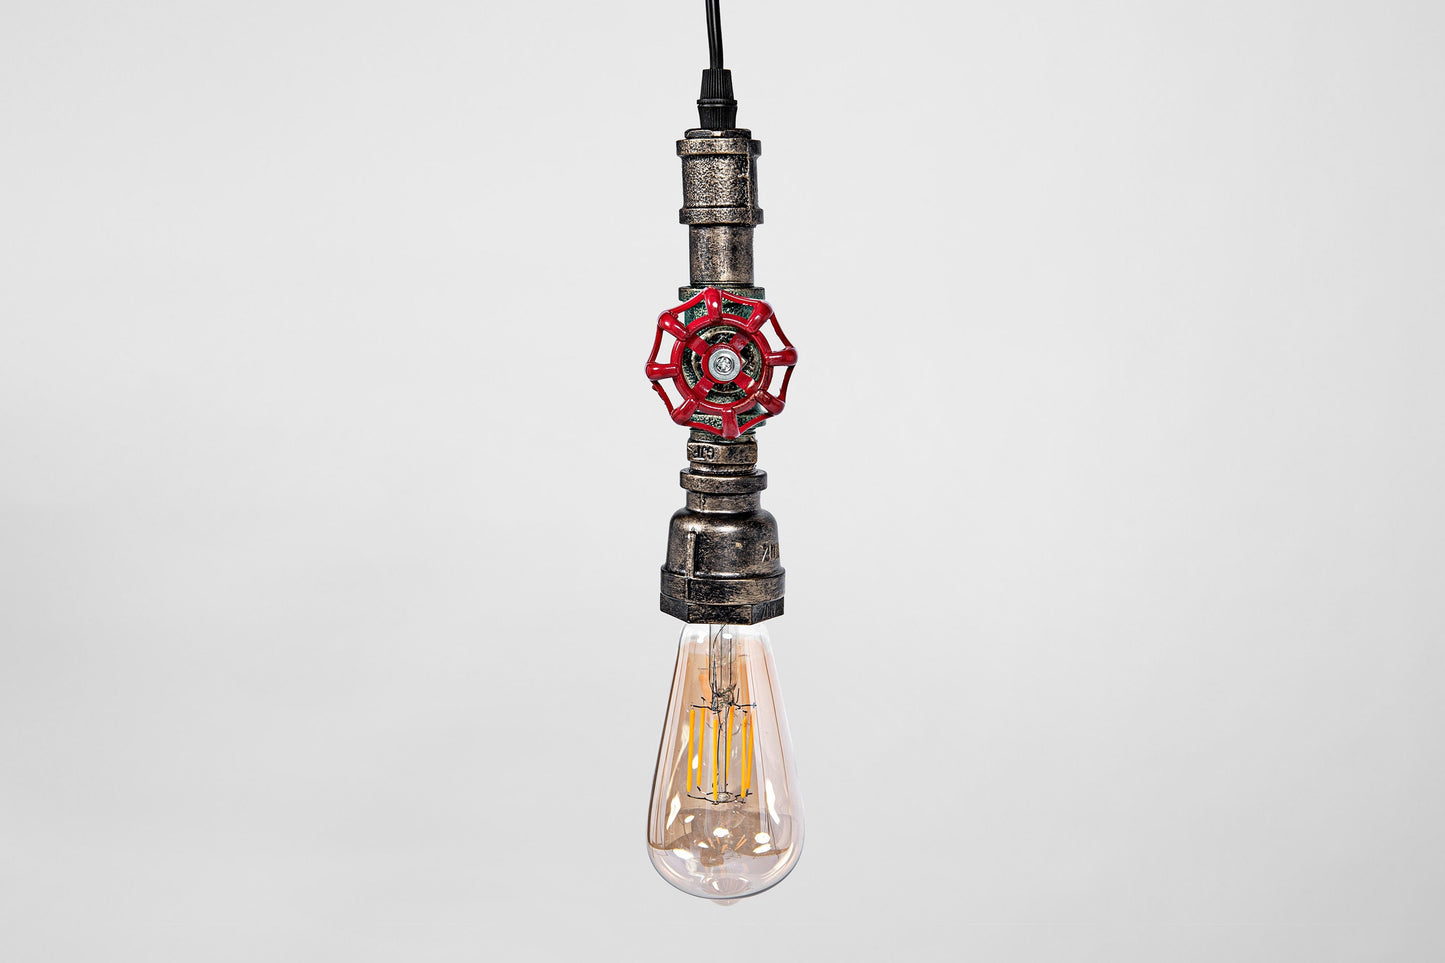 Dr. Nickel - Retro vintage industrial design pendant lamp made of metal